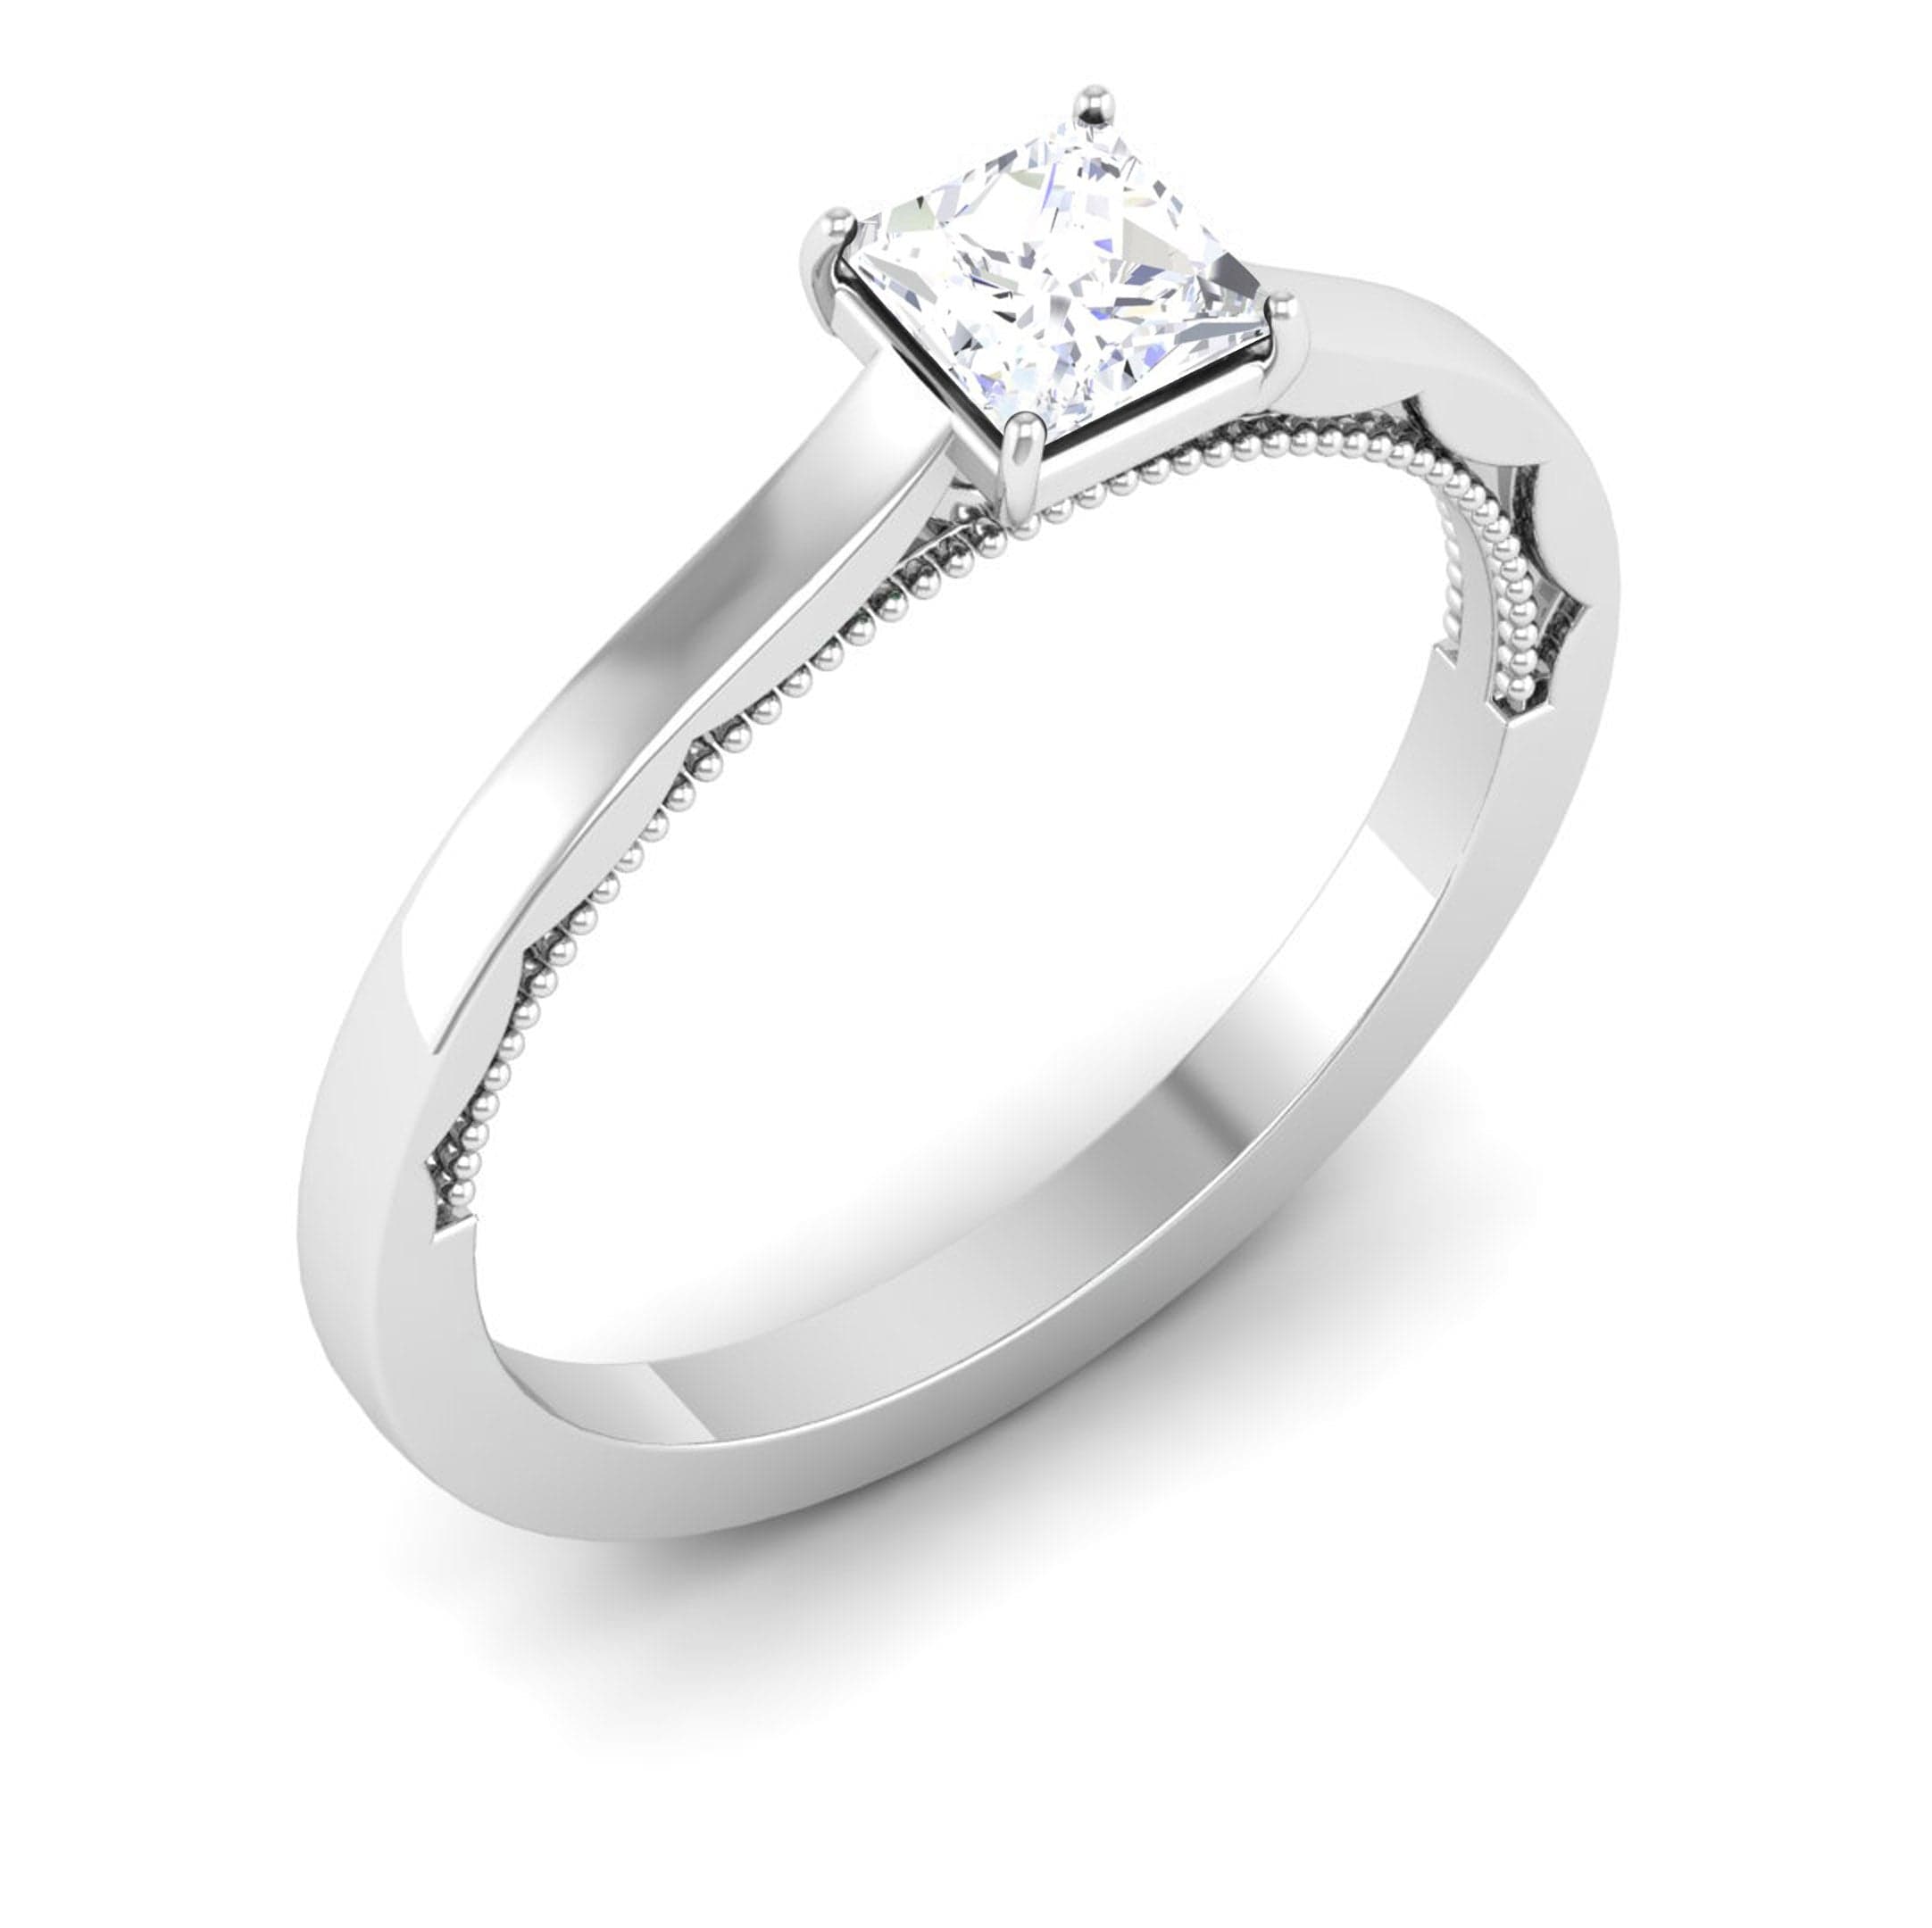 COUTURE-0423DP-TT | Diamond rings engagement princess cut, Diamond  engagement ring designs, Womens engagement rings